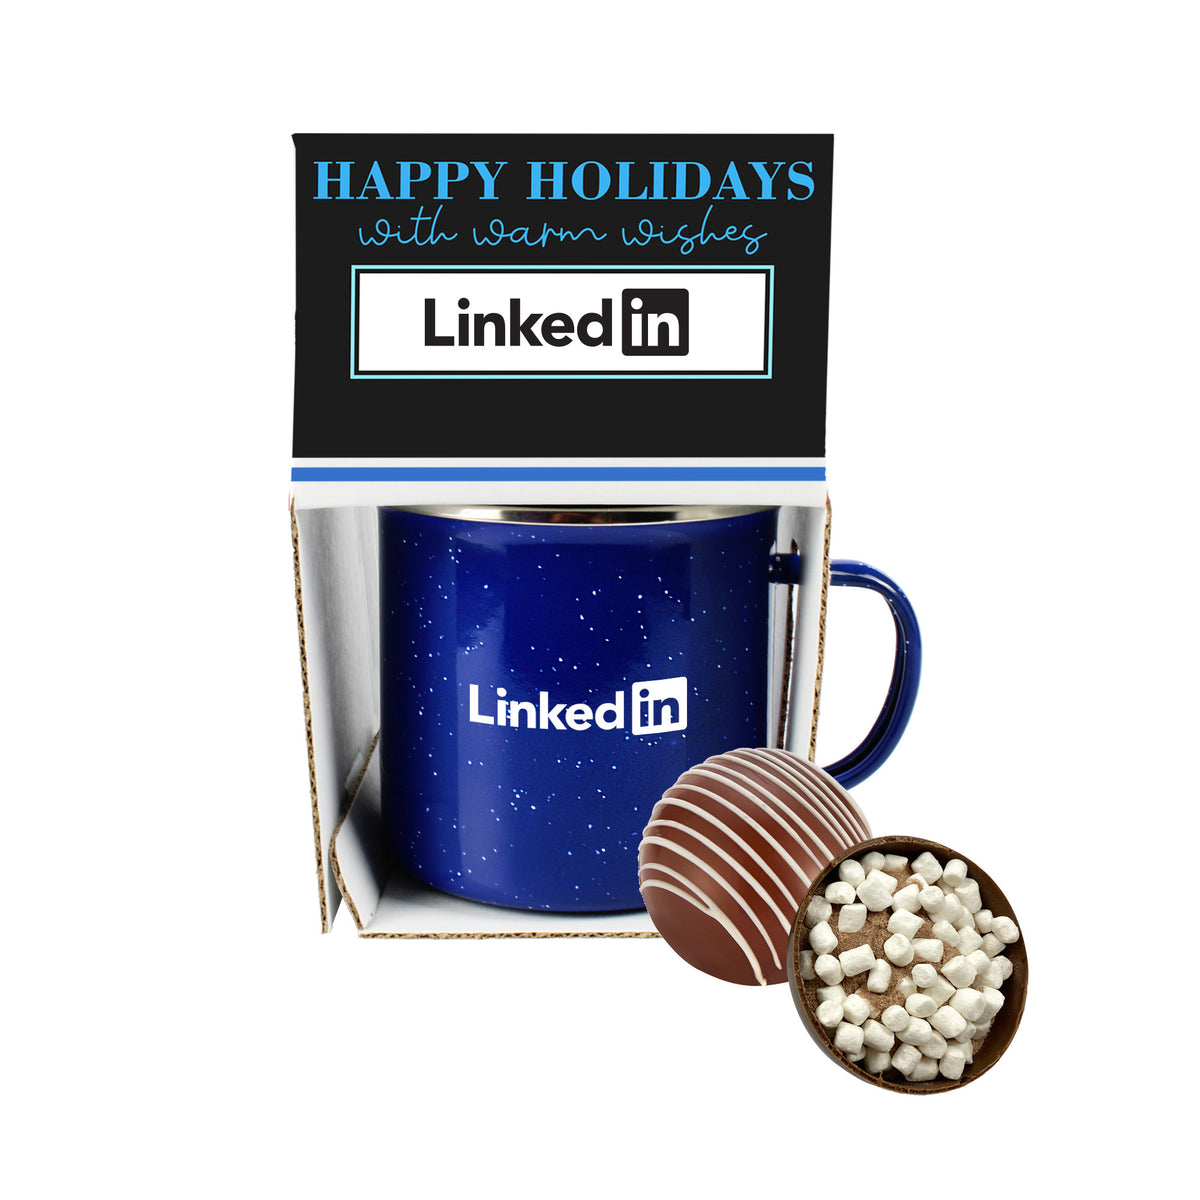 Speckled Camping Mug - 16 oz., Holiday Classic Milk Hot Chocolate Bomb Stuffer